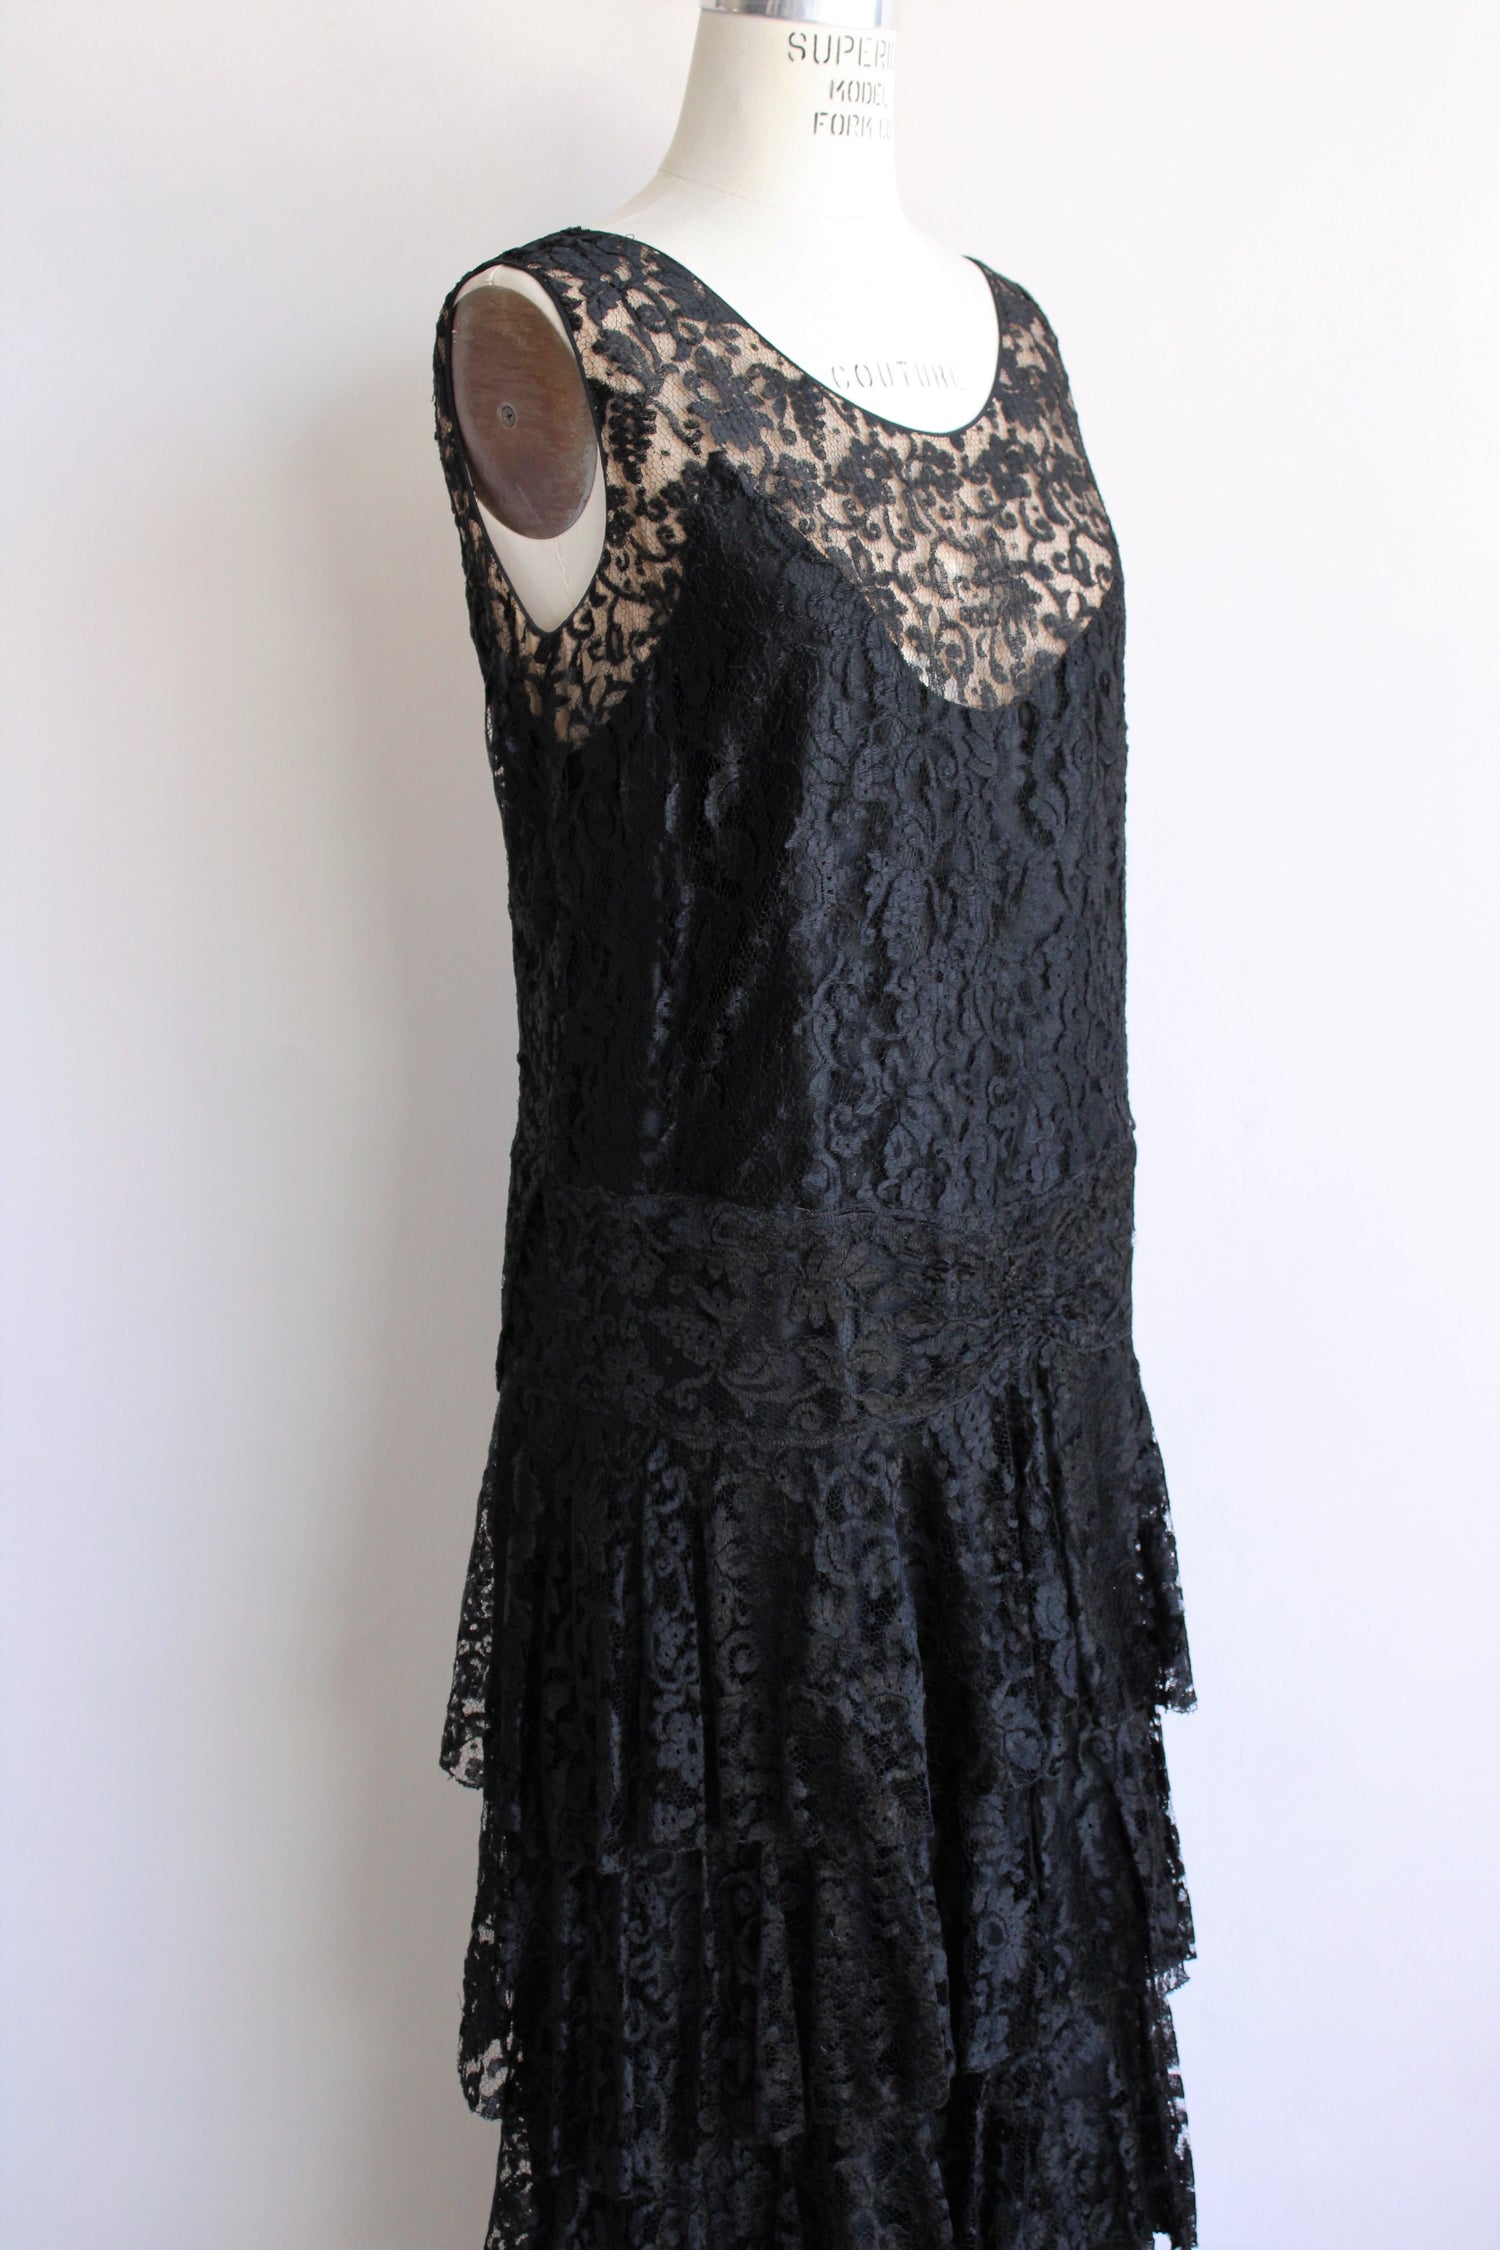 Vintage 1920s Black Lace Flapper Dress – Toadstool Farm Vintage